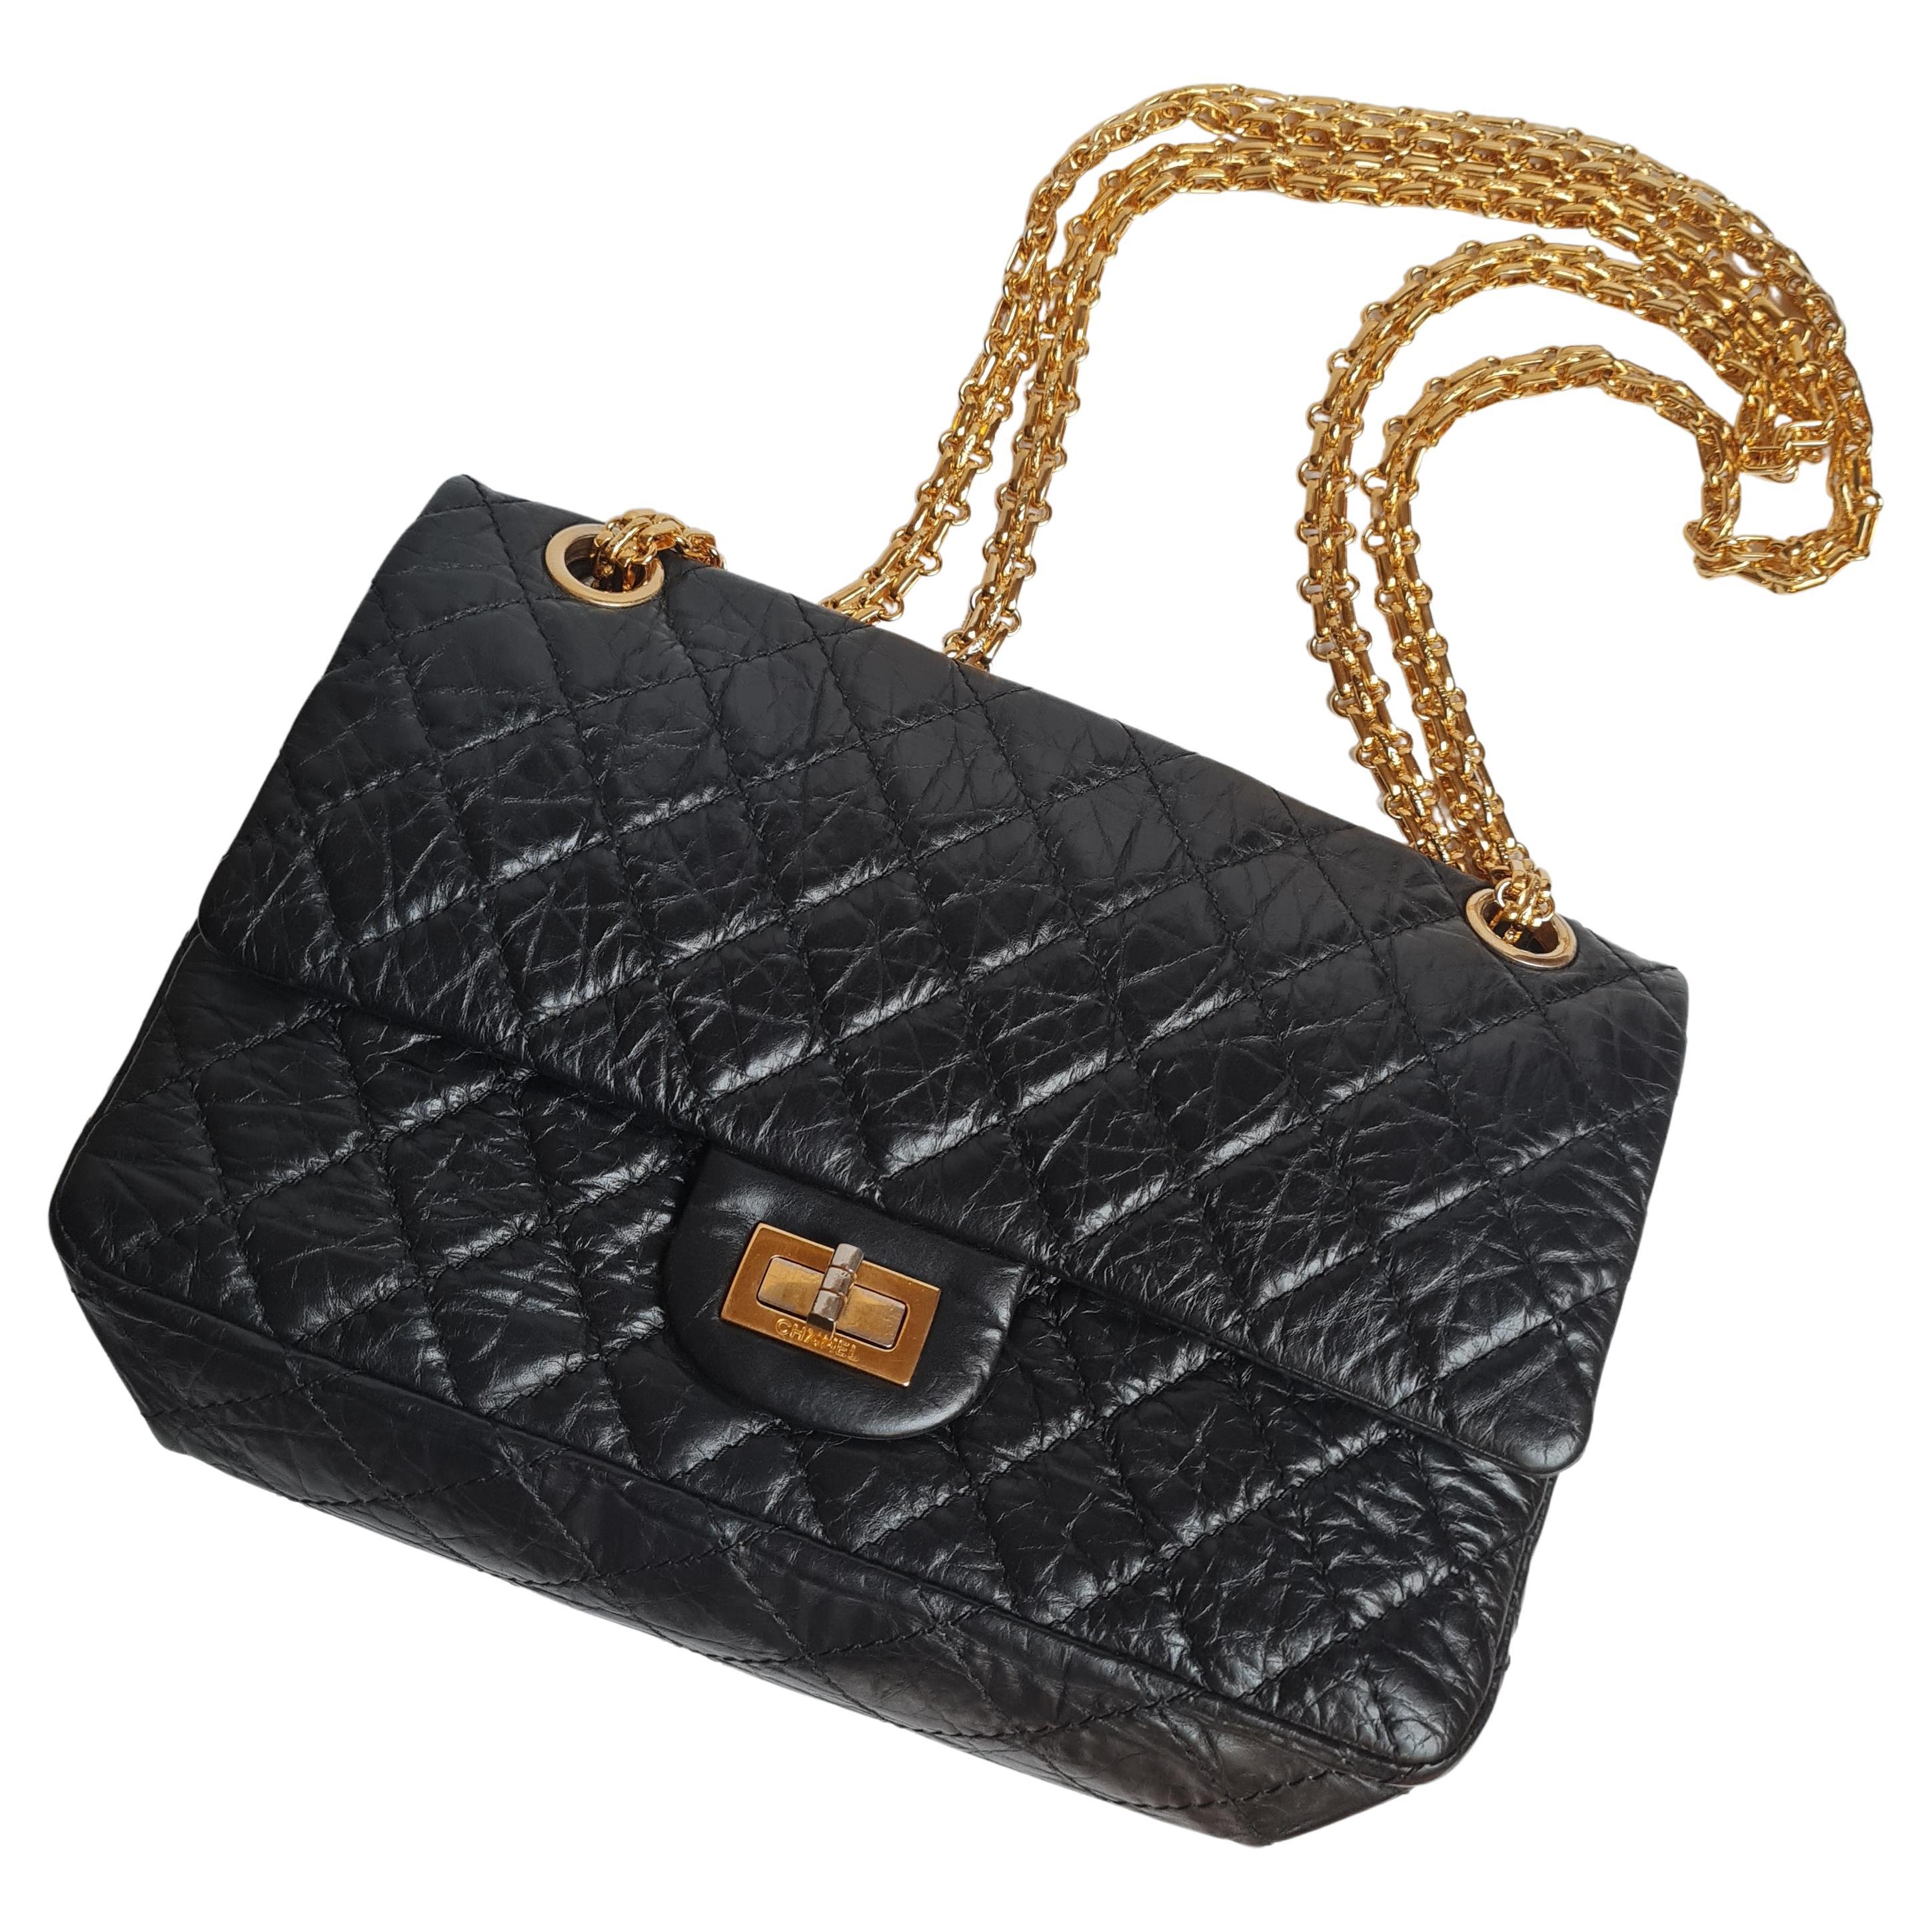 Chanel 225 Medium Black Reissue GHW Bag